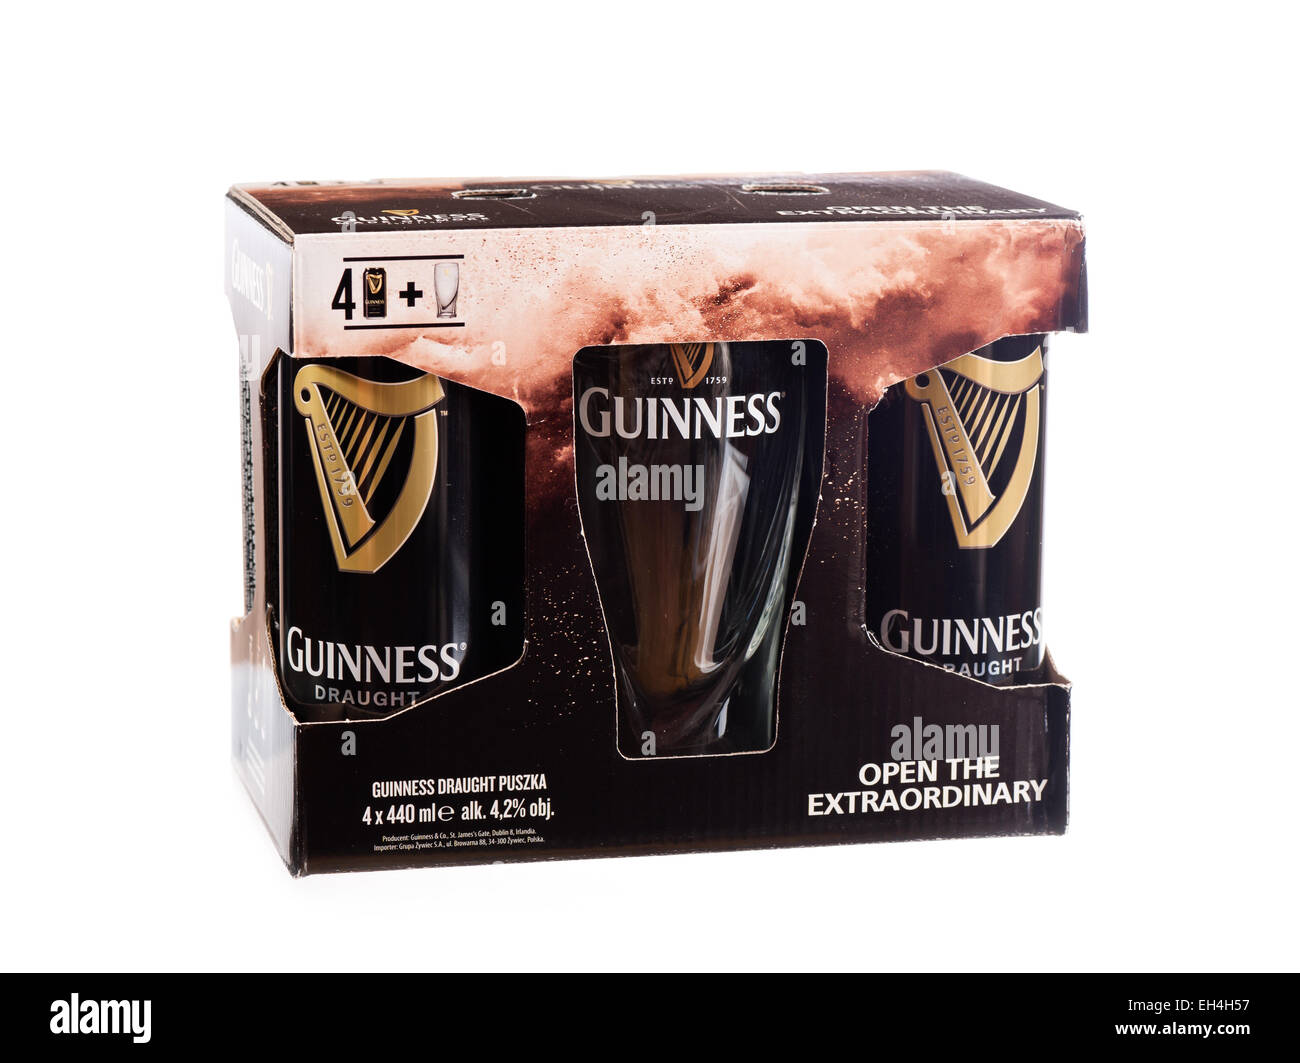 Guinness 4 Latas + Vaso – Cervezas del Mundo